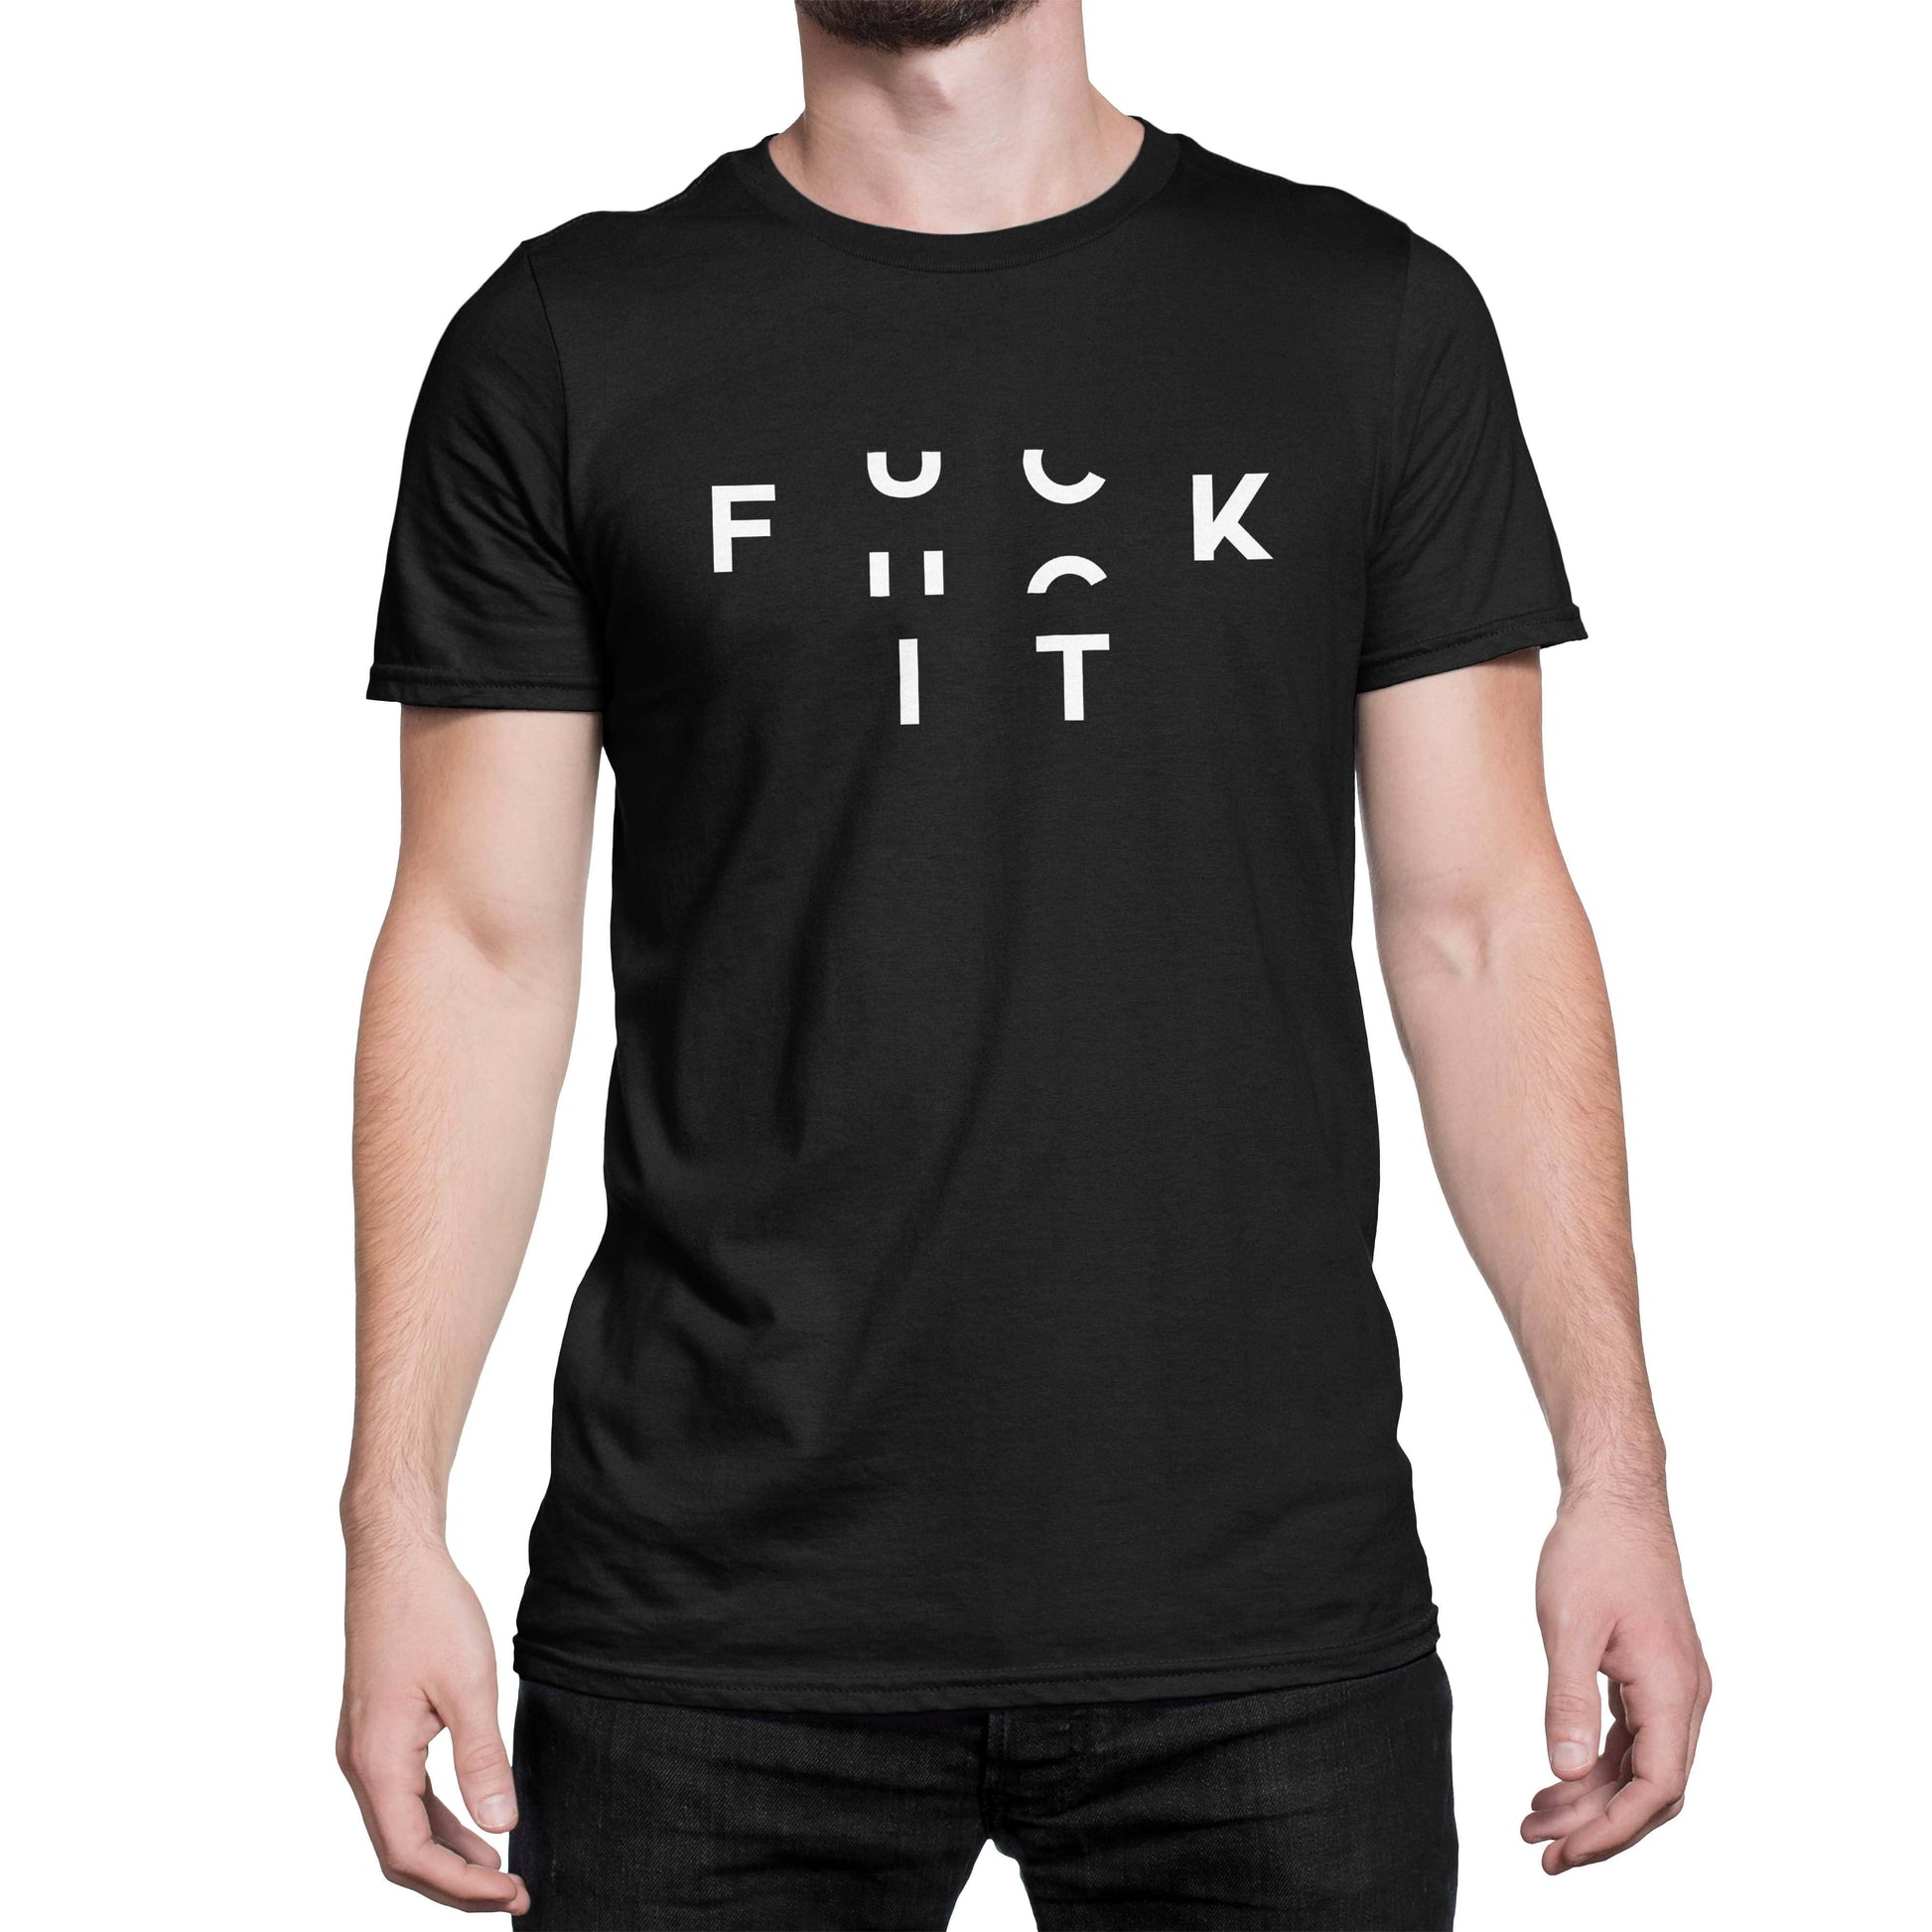 F**K IT! Men's T-shirt T-shirt by DIRT & GLORY